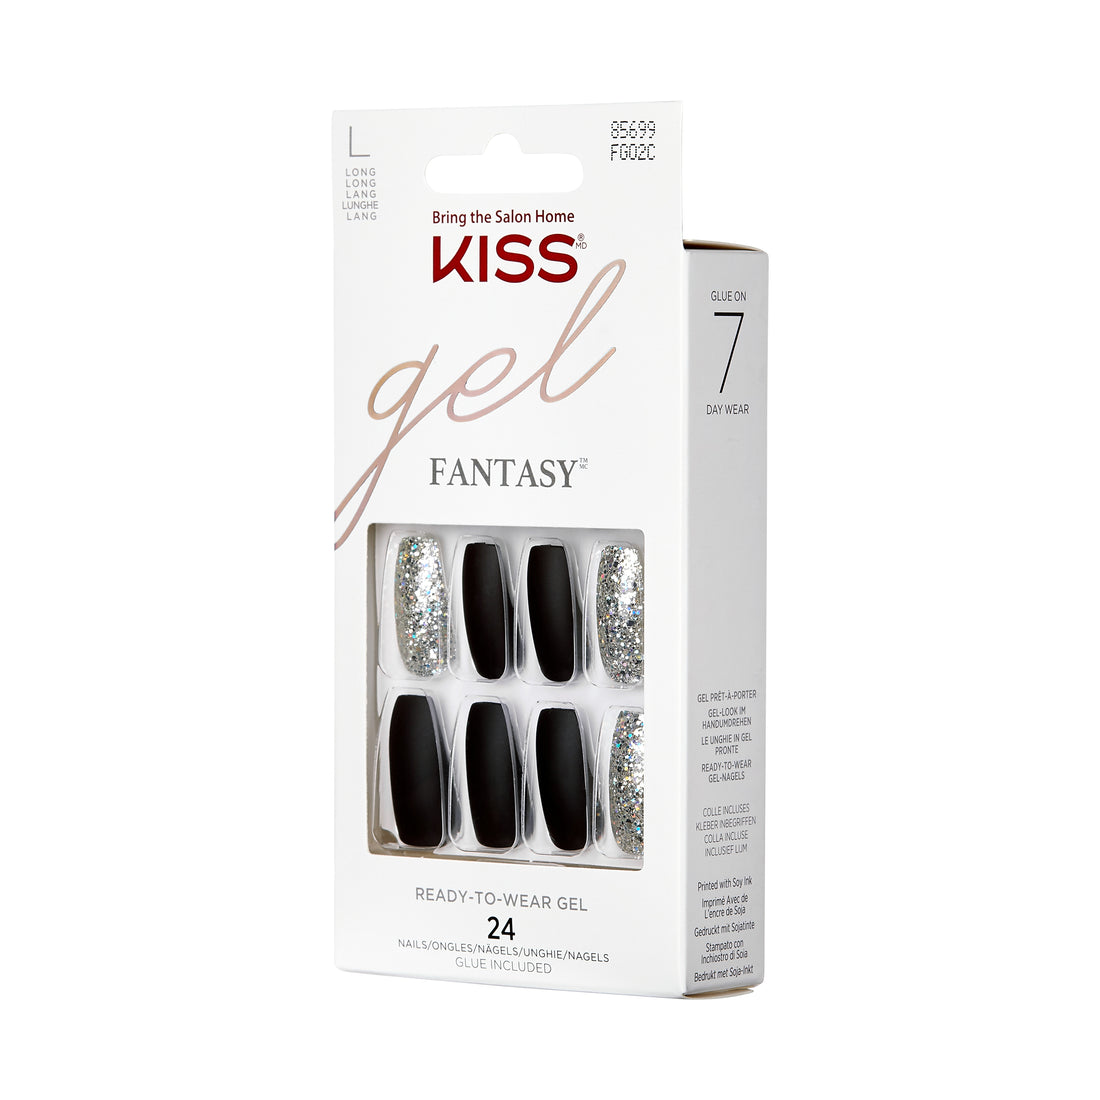 KISS Gel Fantasy Nails - A Whole New World